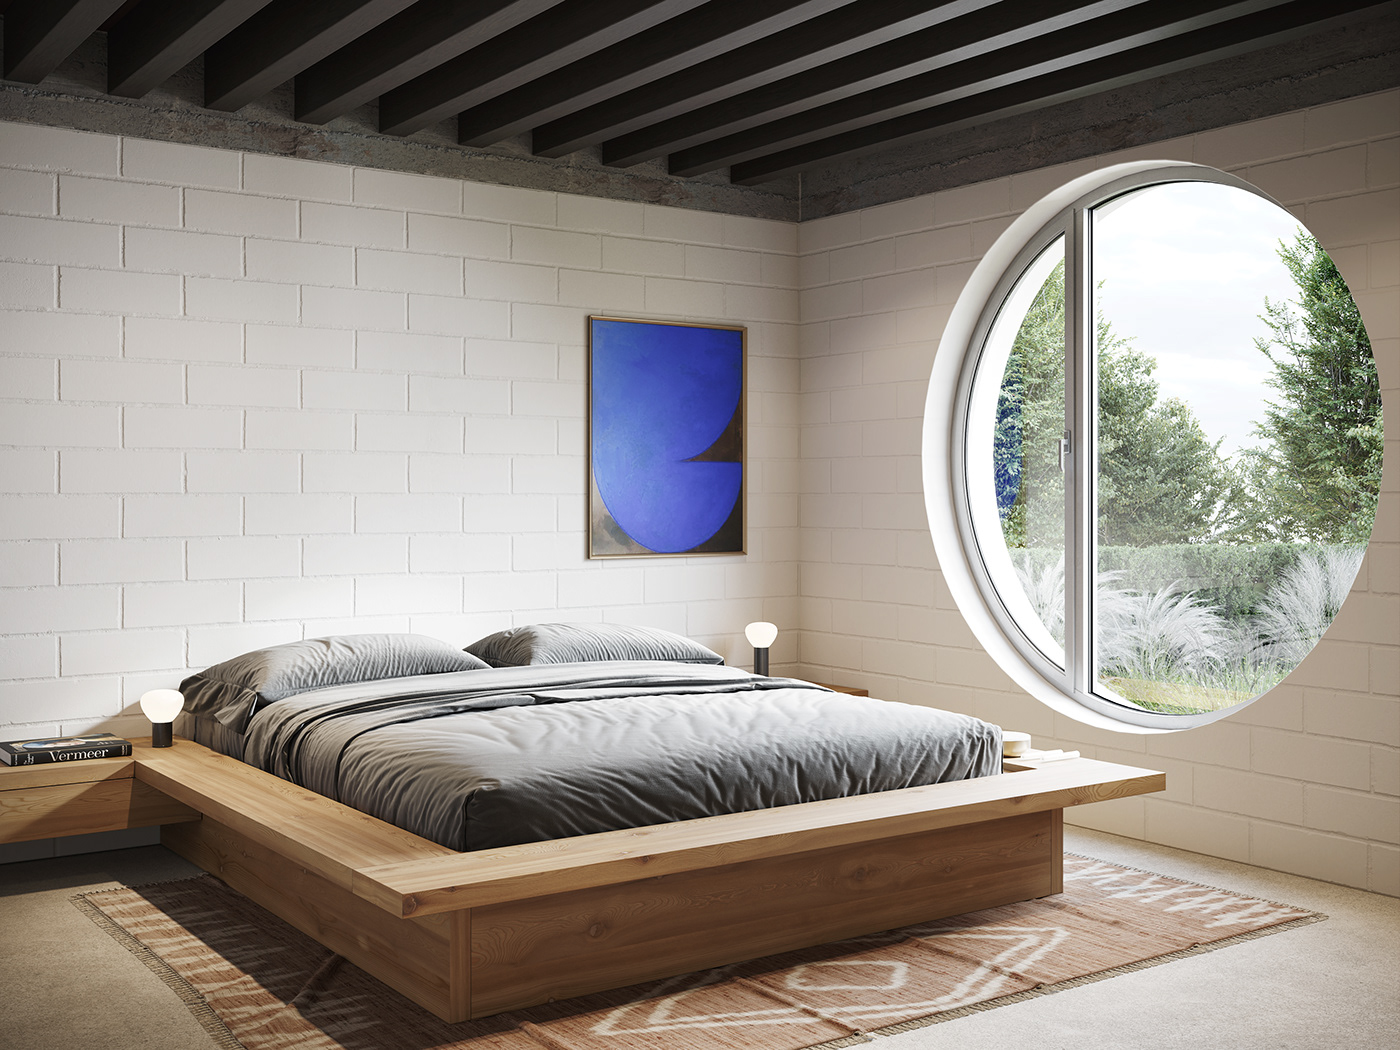 3ds max arhitecture corona corona render  design exterior Interior Render visualization